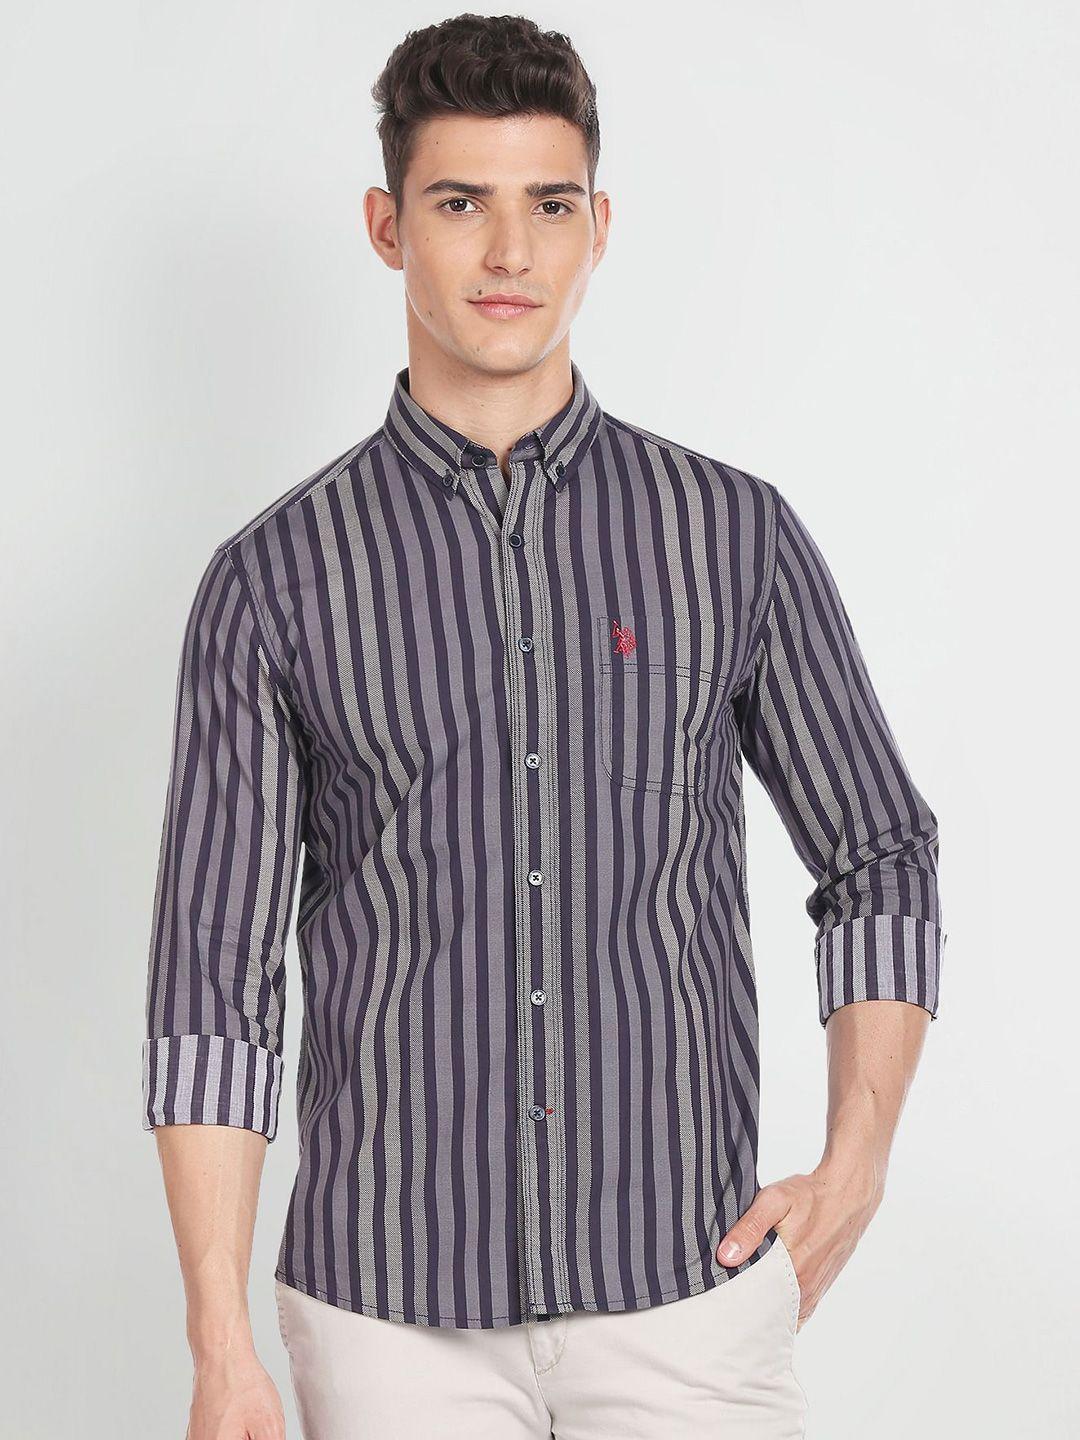 u.s. polo assn. denim co. vertical striped slim fit pure cotton casual shirt